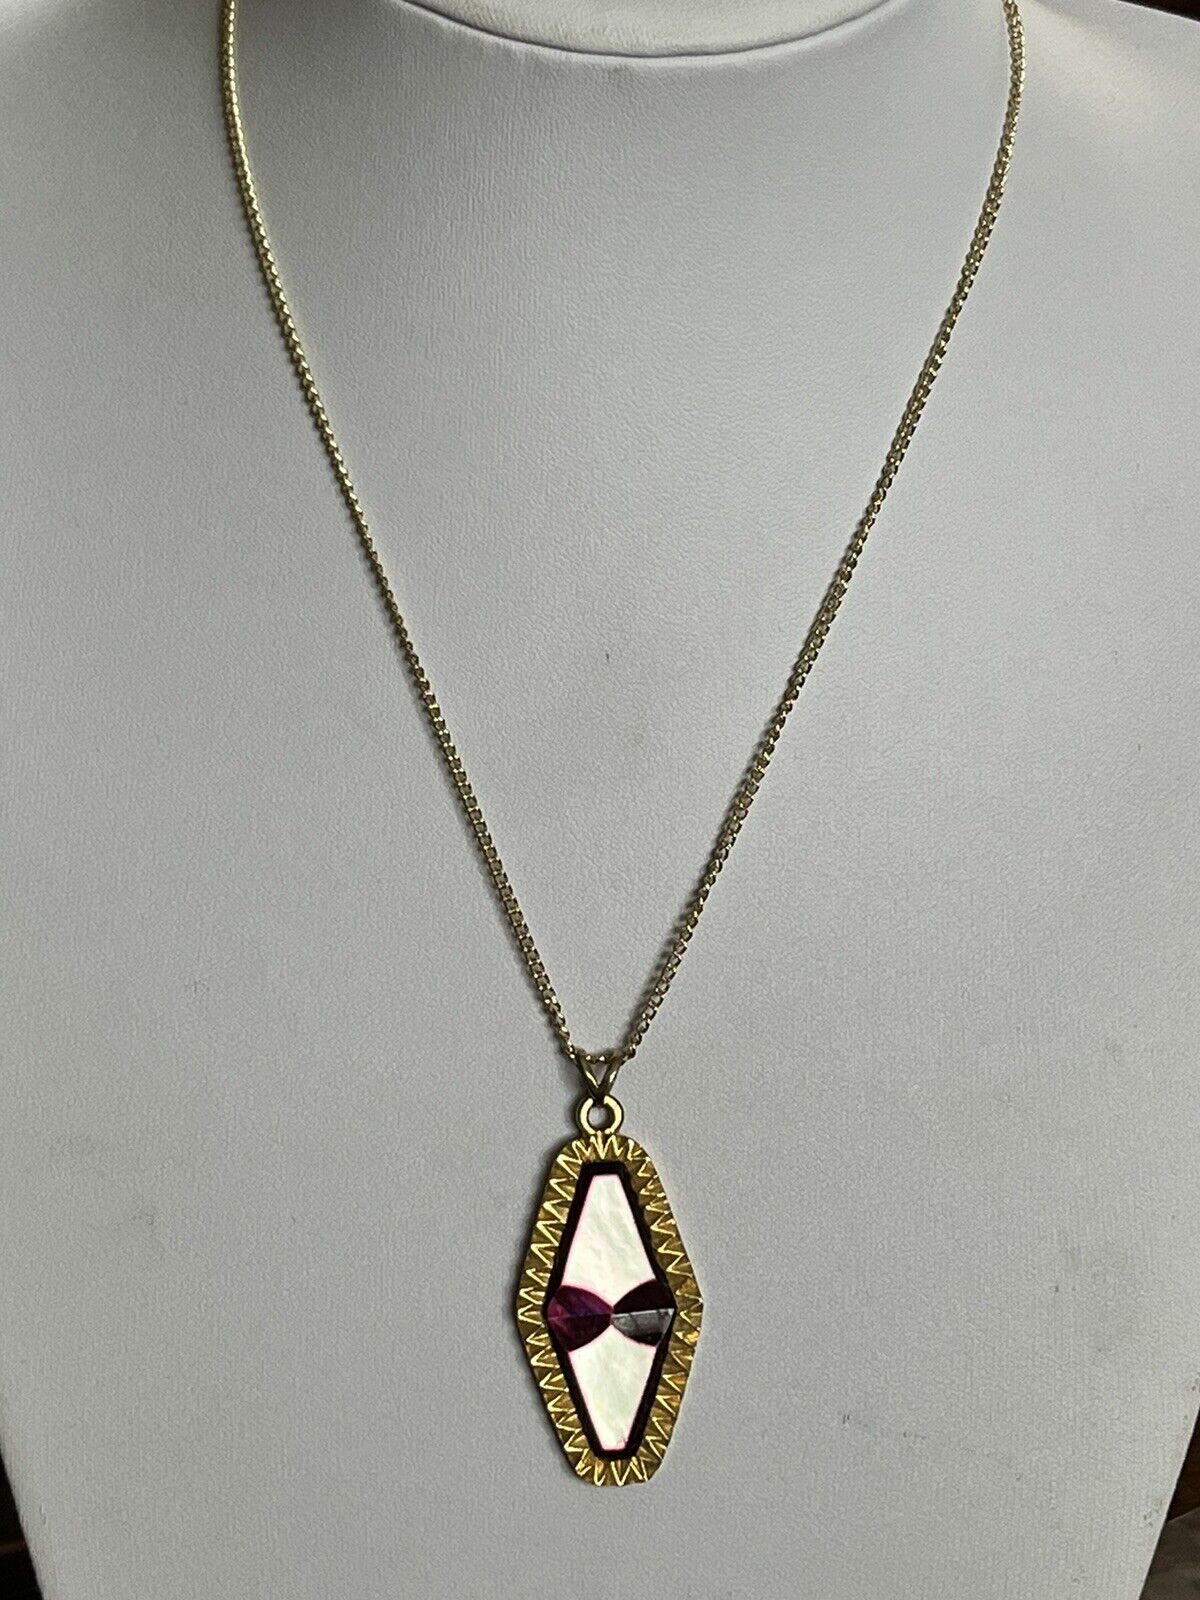 Vintage Signed Exquisite Gold Tone Pendant Necklace